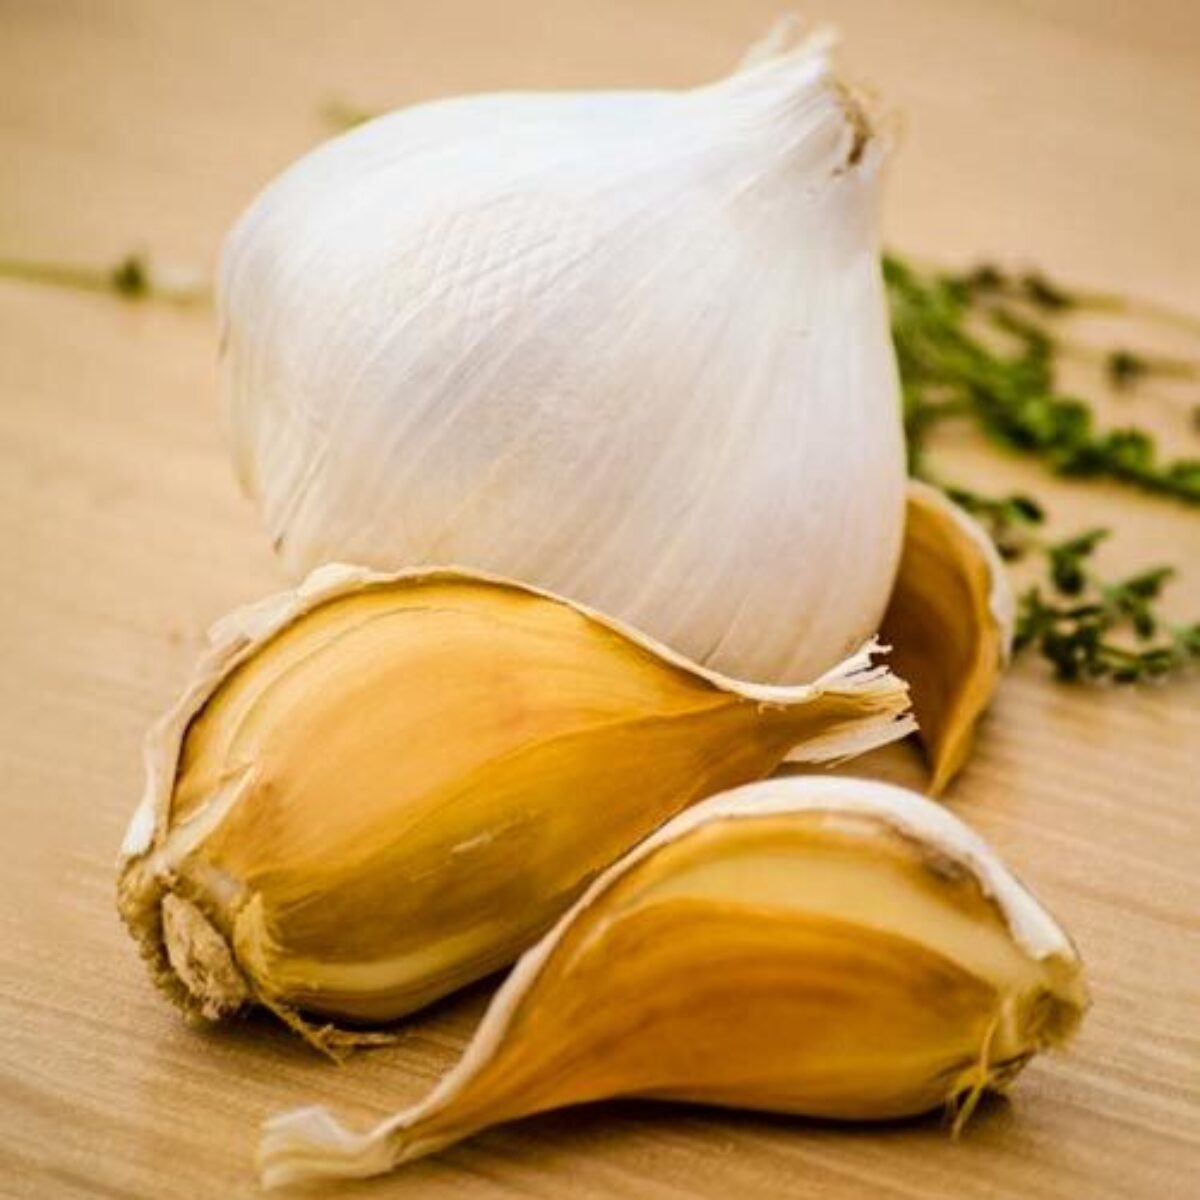 How to grow green garlic at home - Vanita's Corner